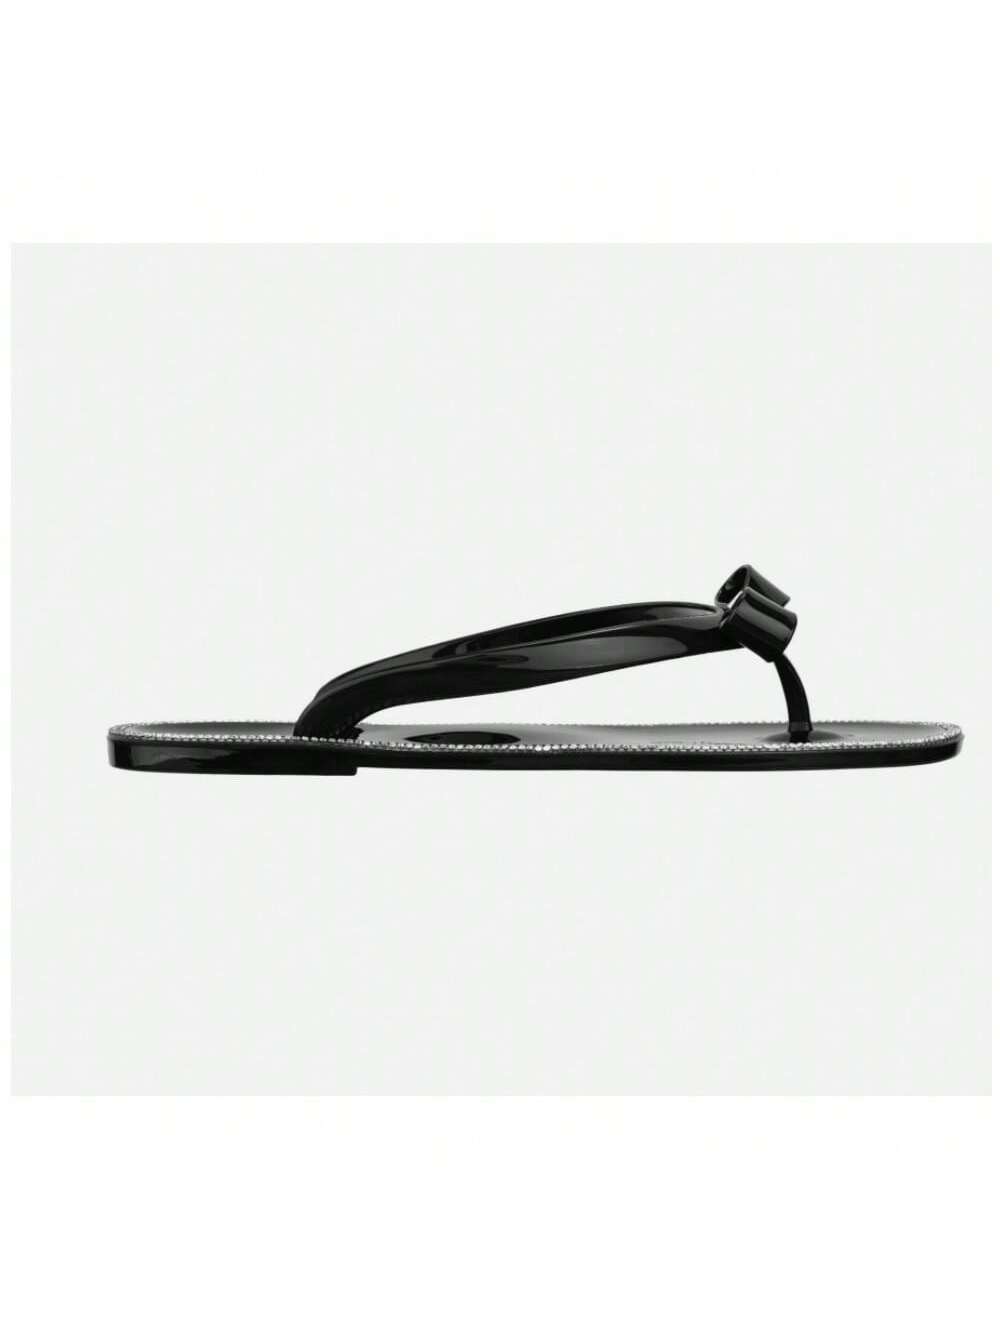 Women's Jelly Sandals Rhinestone Flip Flops Slide Flat Sandals-Black-2